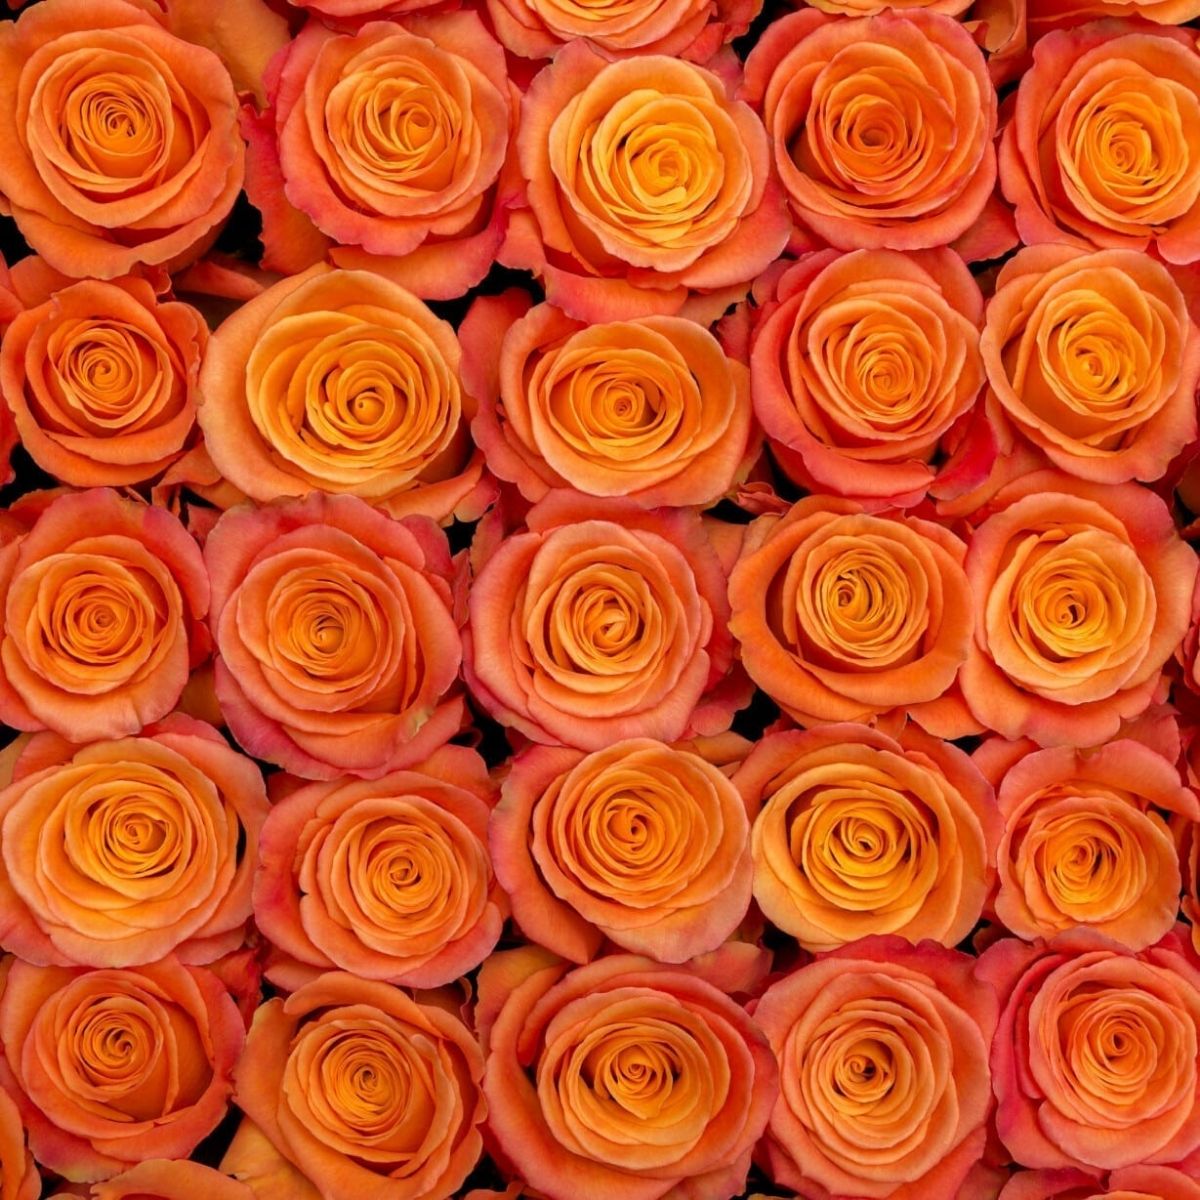 rose-confidential-cut-flower-on-thursd-featured